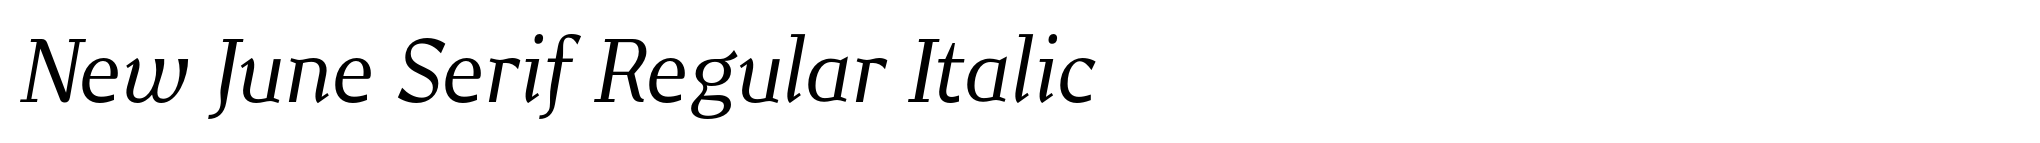 New June Serif Regular Italic image